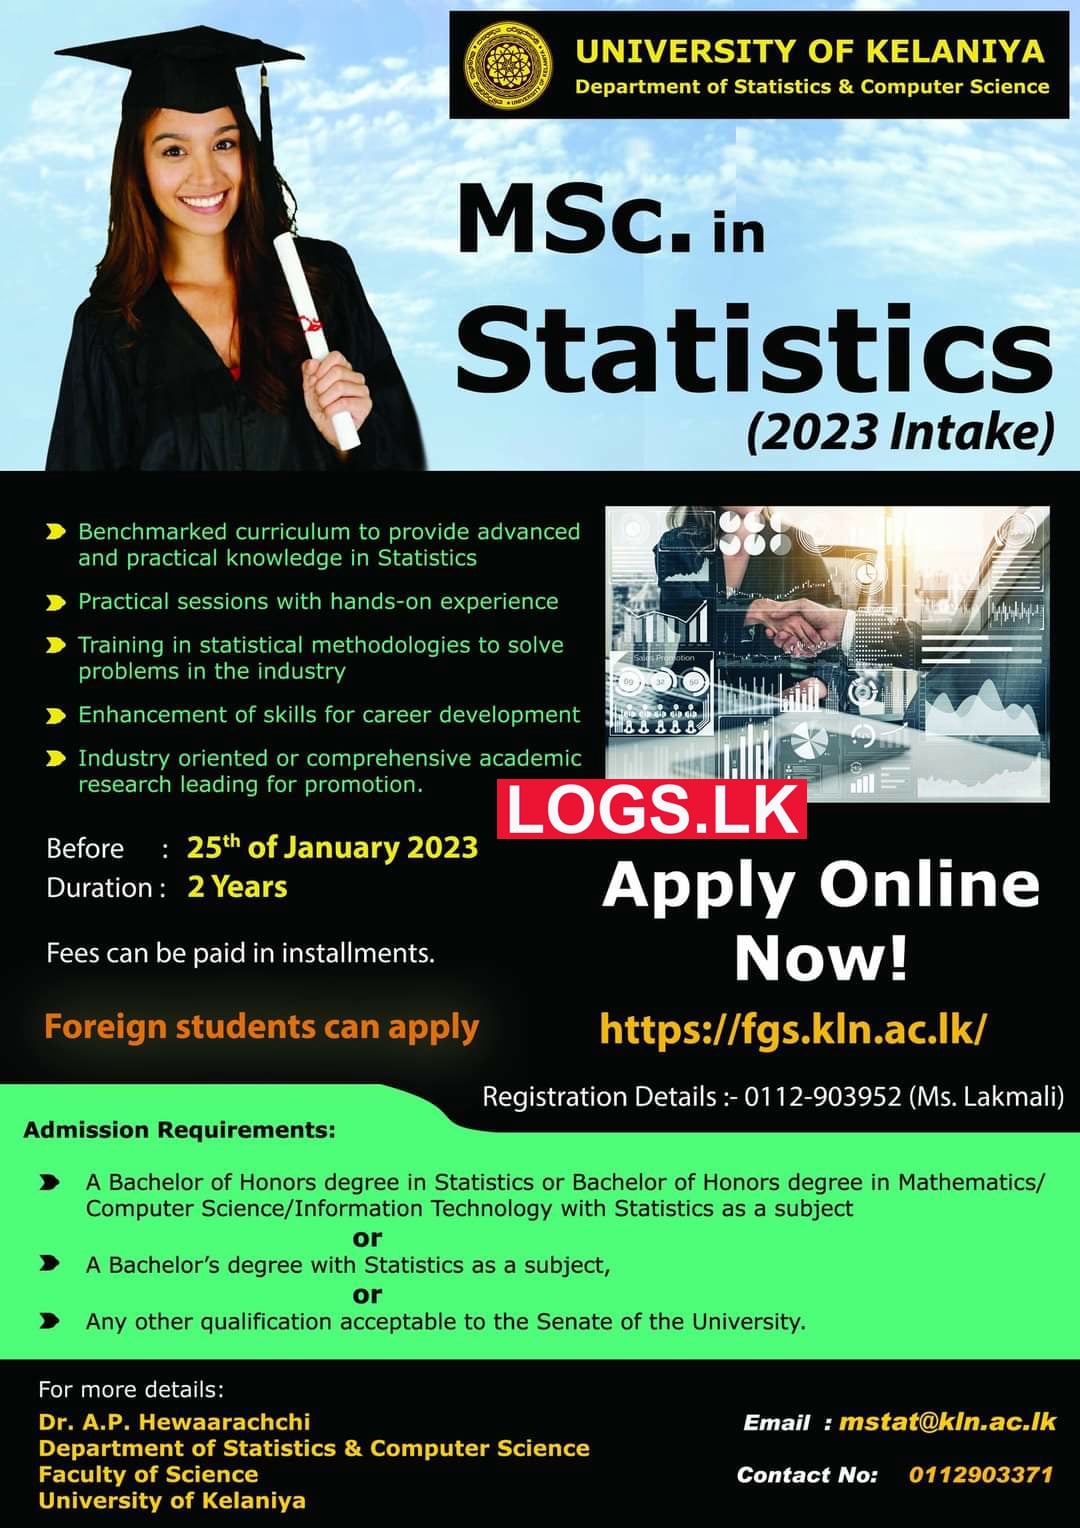 MSc. in Statistics 2023 Degree - University of Kelaniya Apply Online Details, Application Form Download